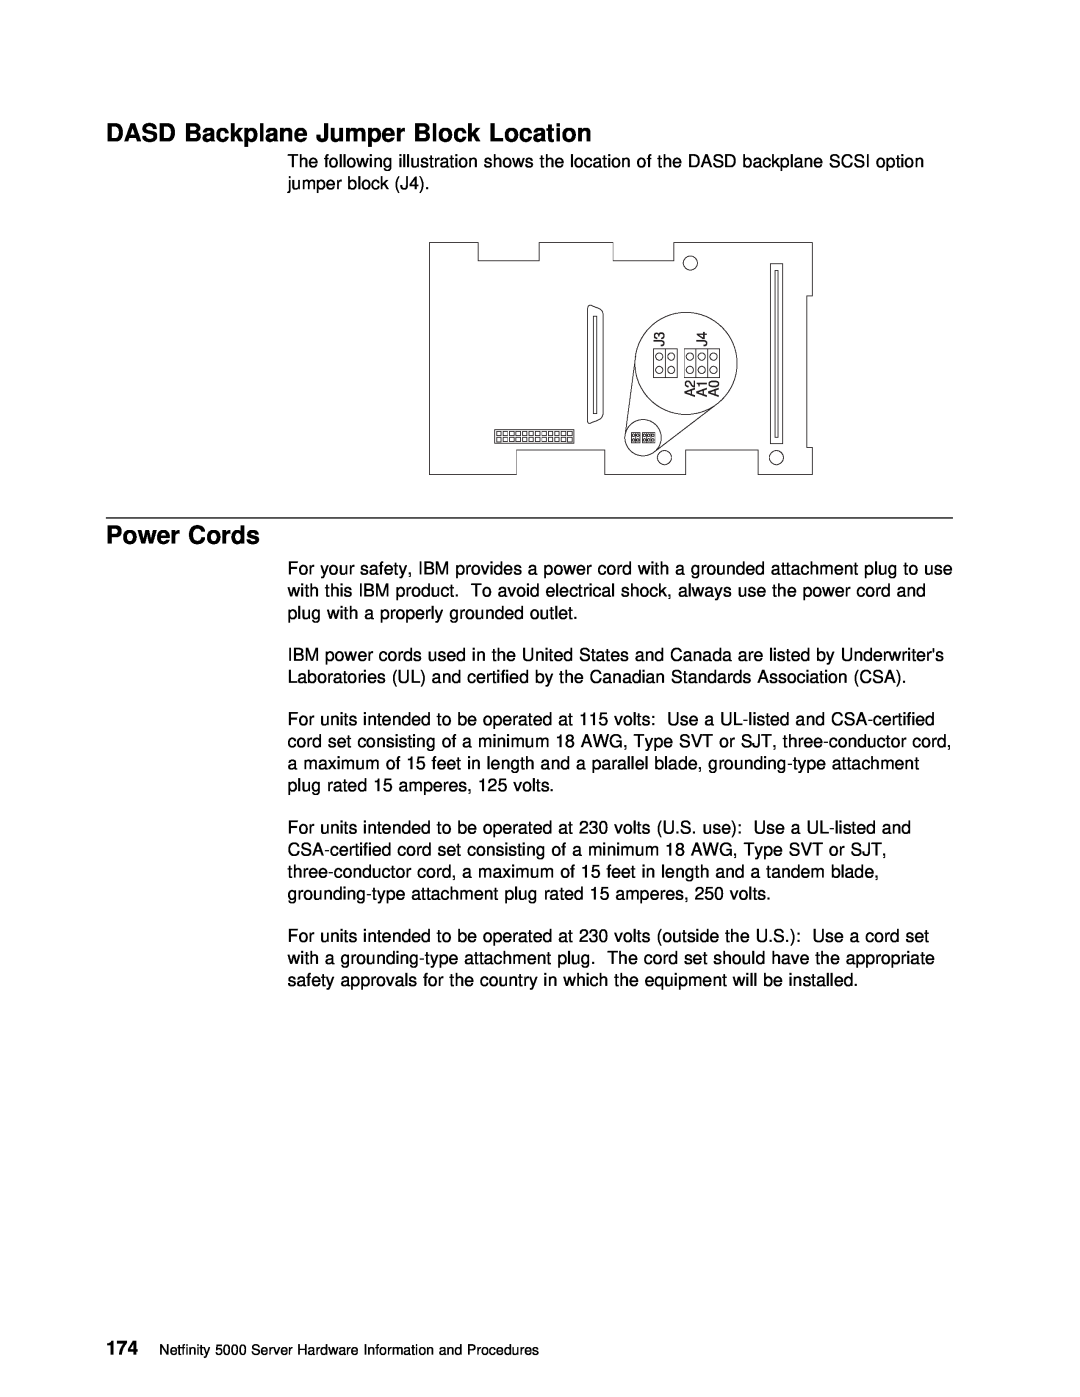 IBM 5000 manual DASD Backplane Jumper Block Location, Power Cords 